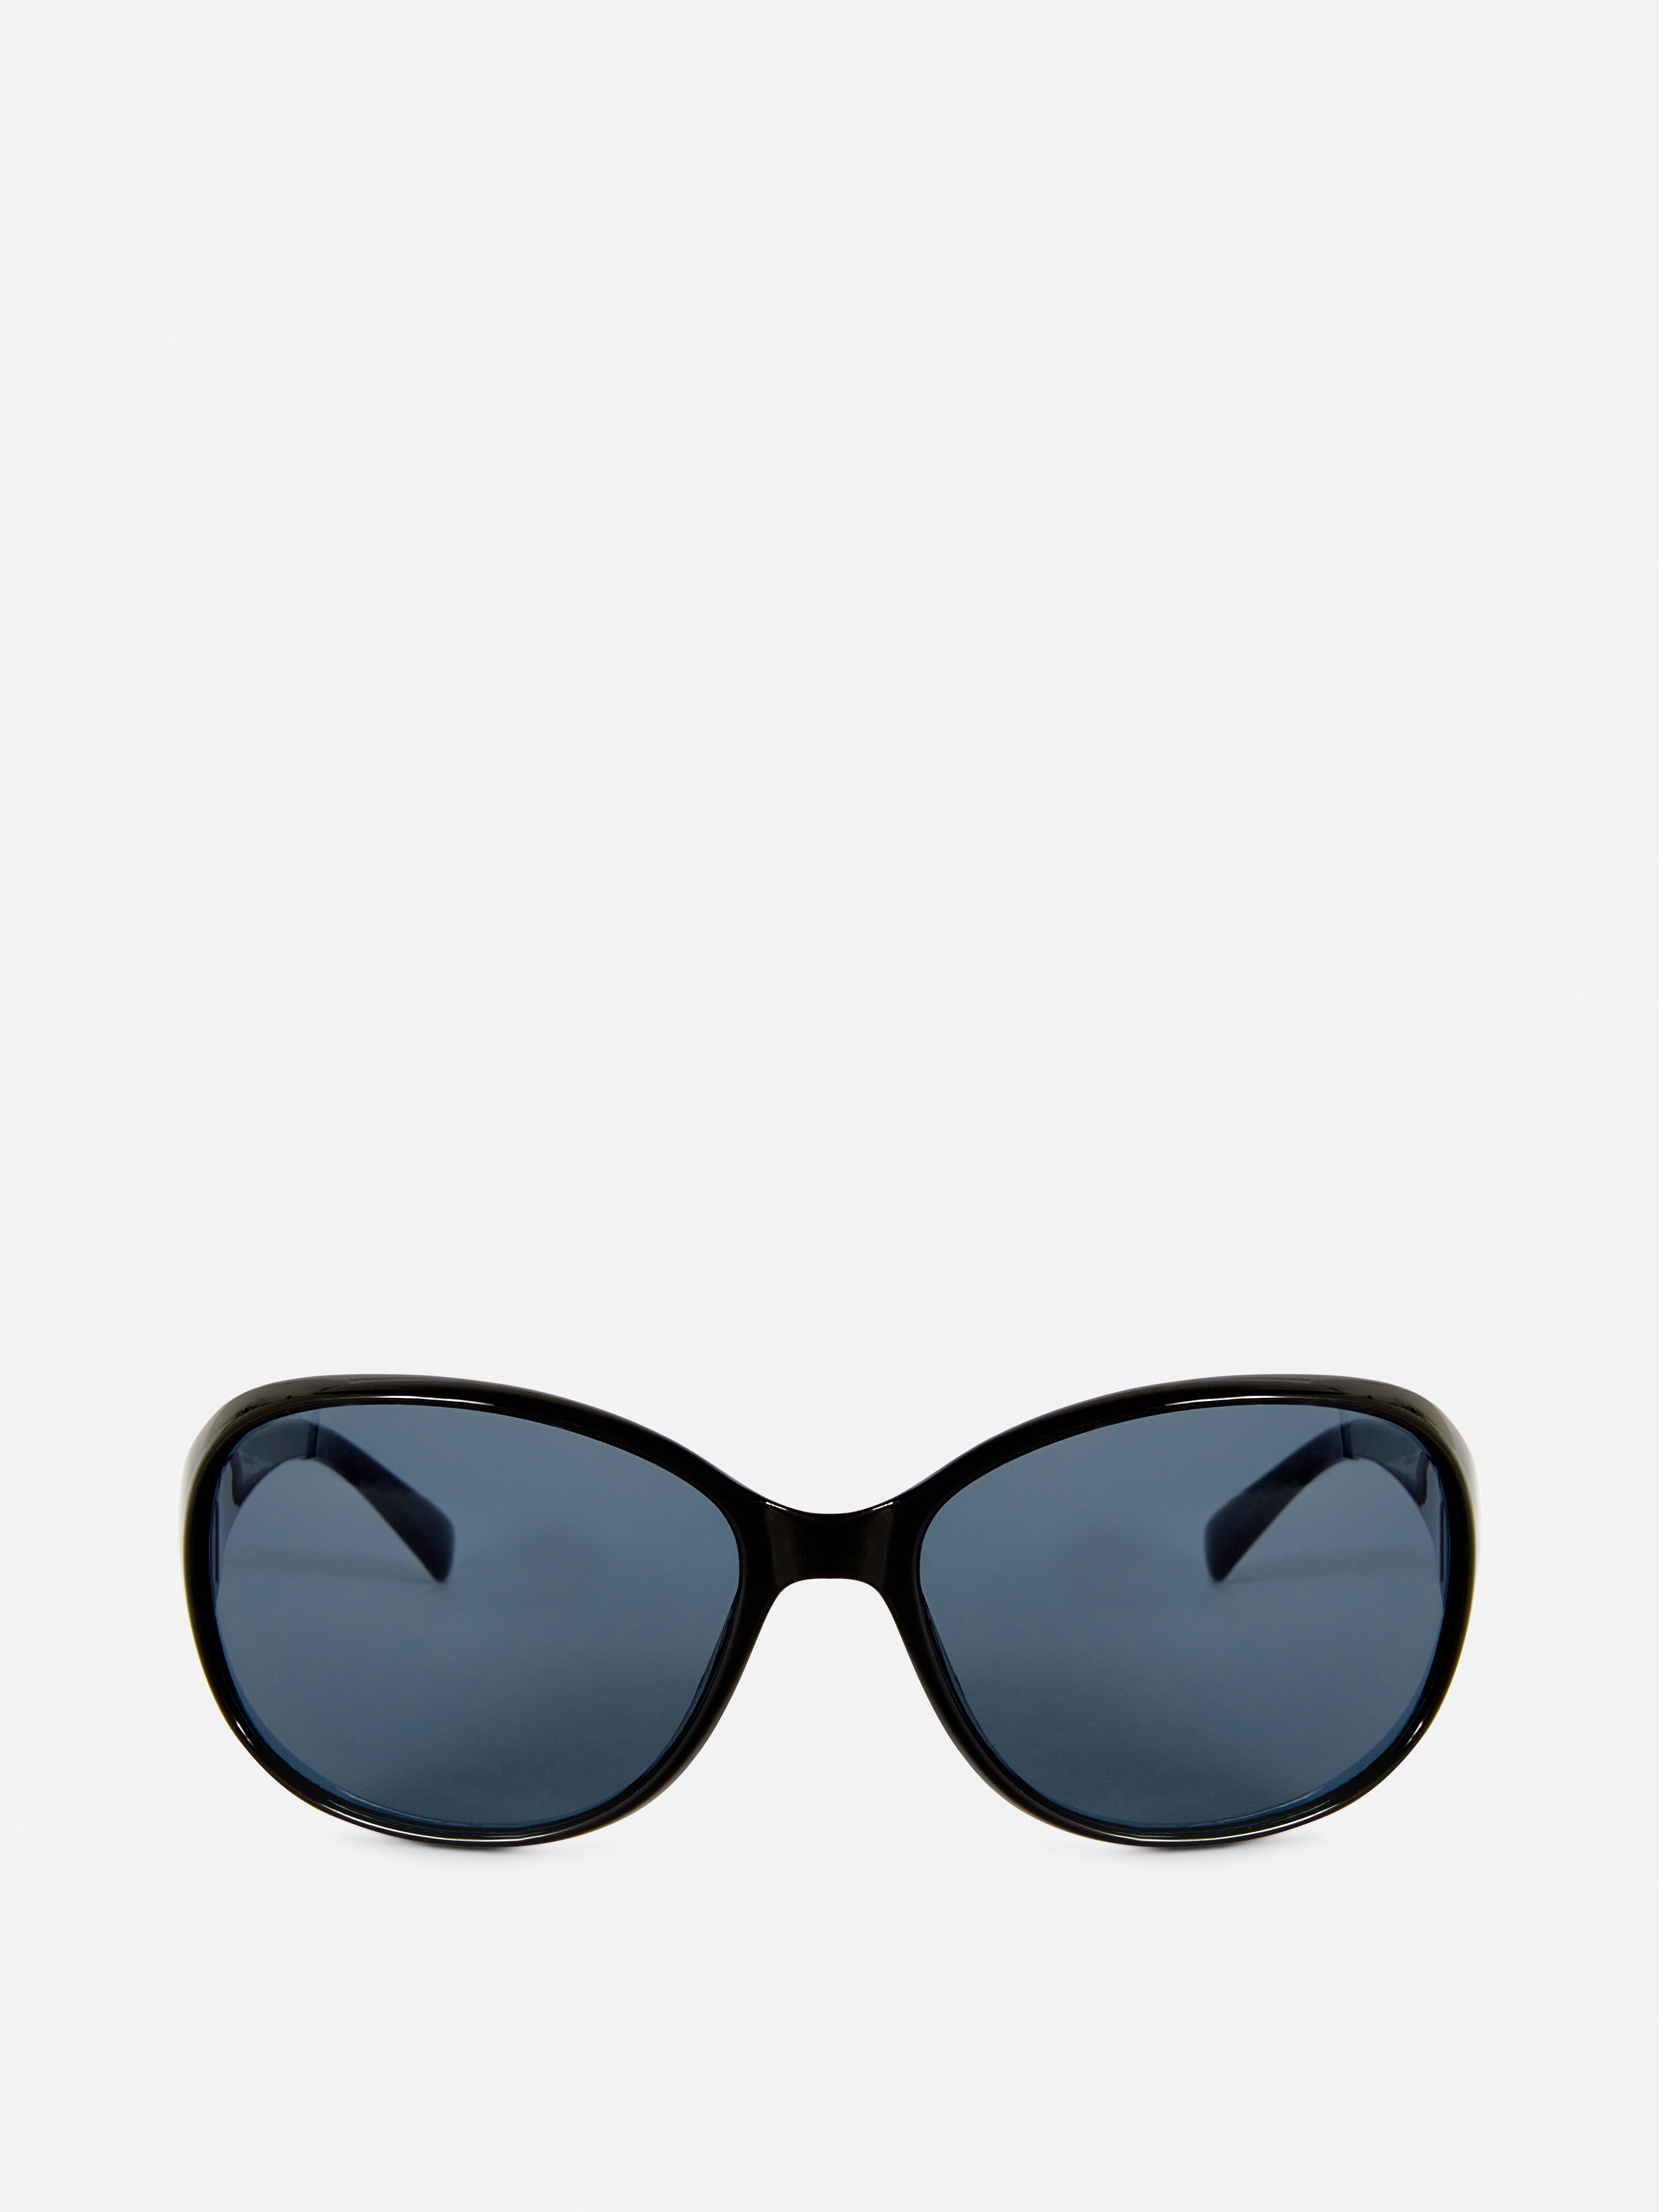 PUGS Sunglasses Shiny Black Metal Frame / Spring Temples UV400 - NWT 